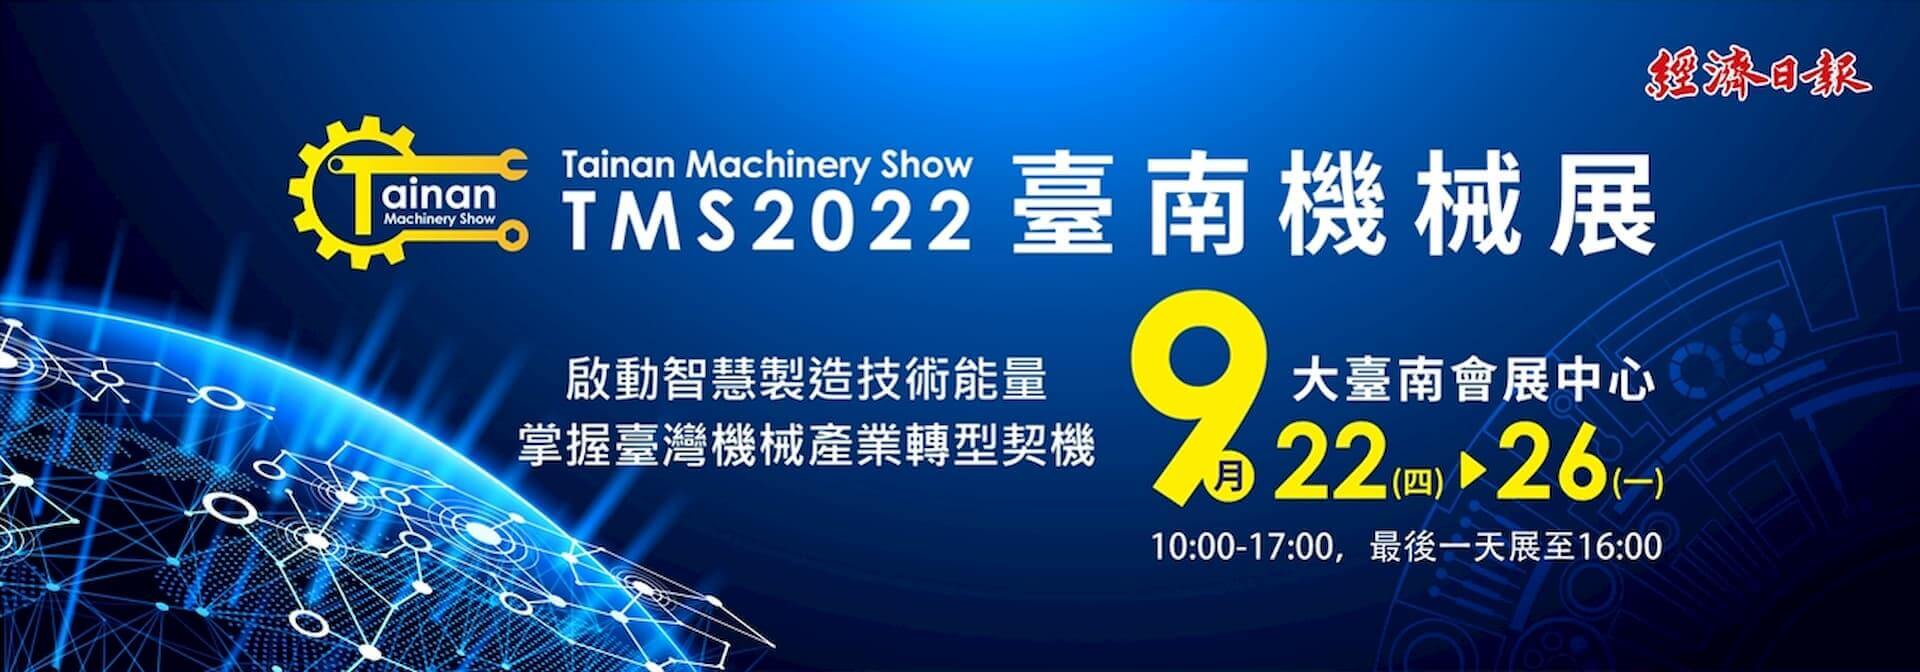 2022 Tainan Machinery Show